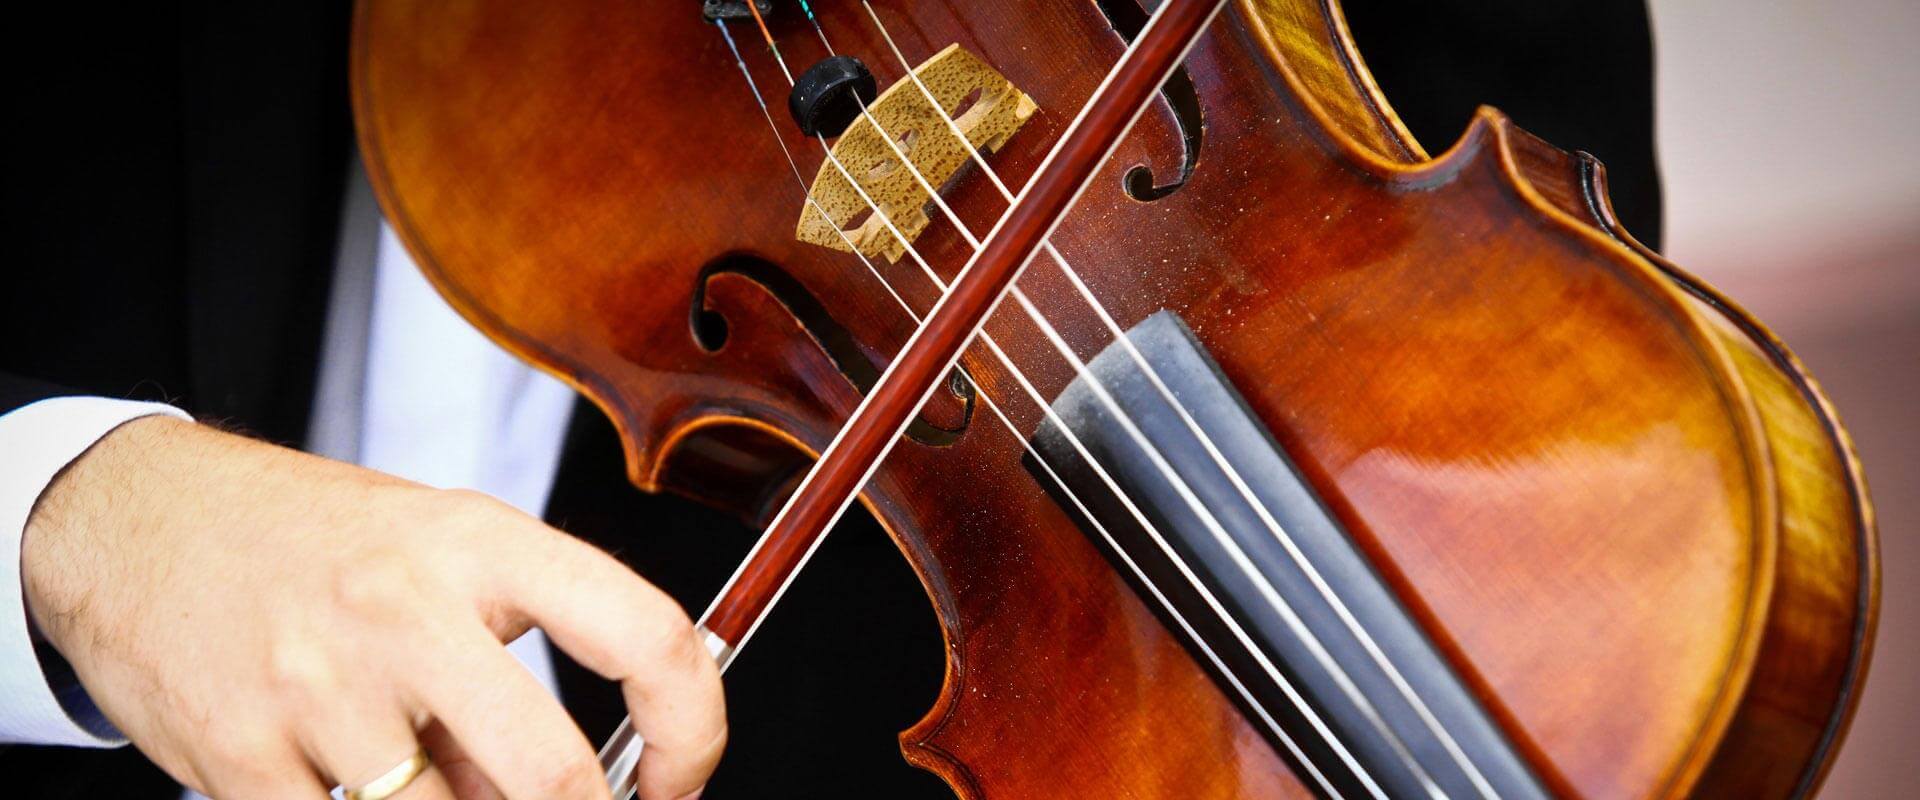 Viola Lessons in Lexington KY - Musika Music Teachers